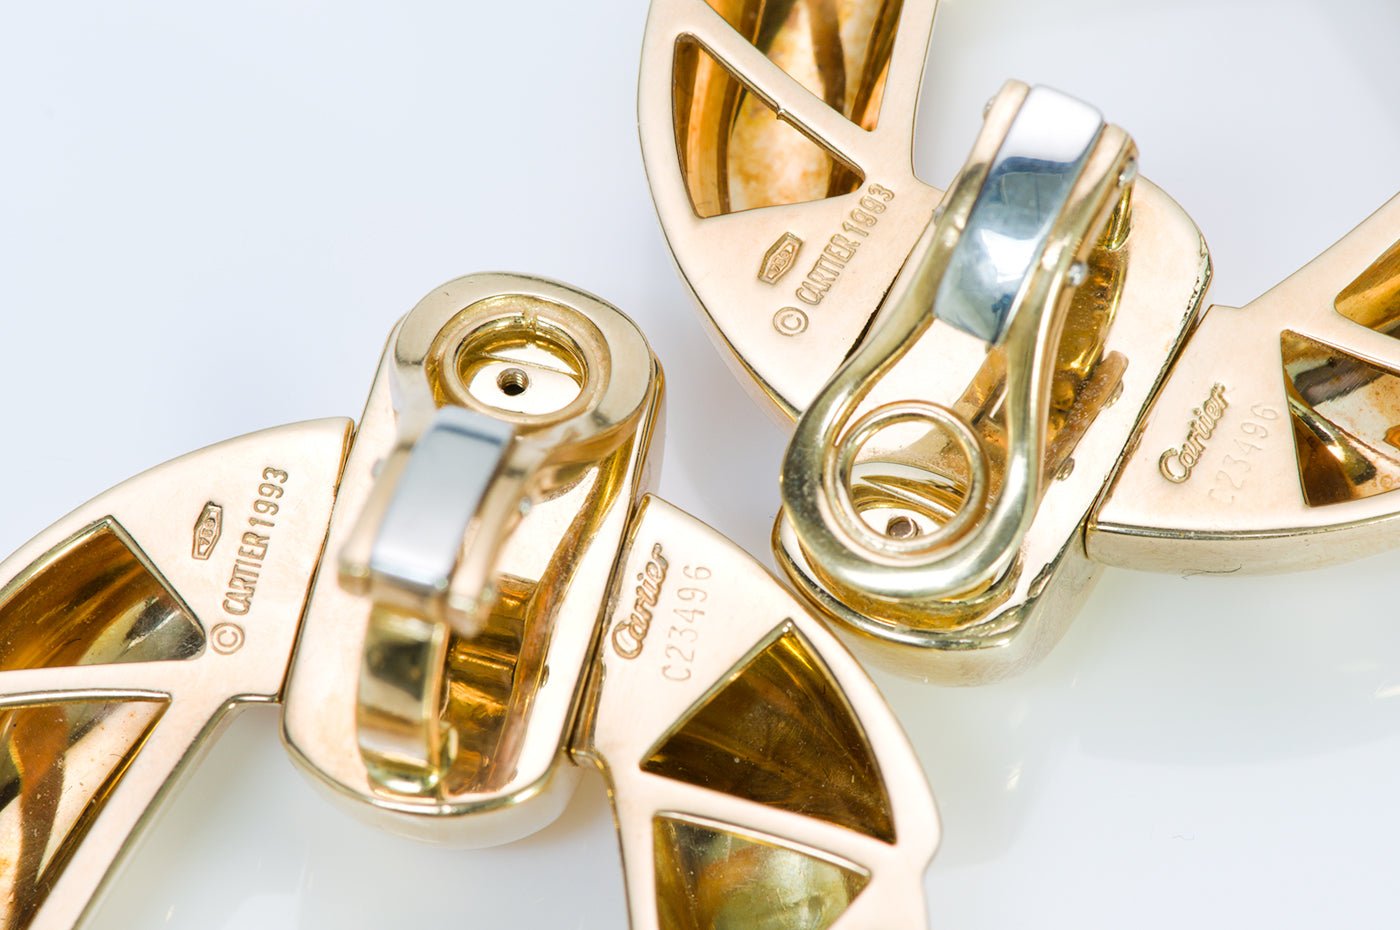 Cartier 18K Gold Door-Knocker Earrings